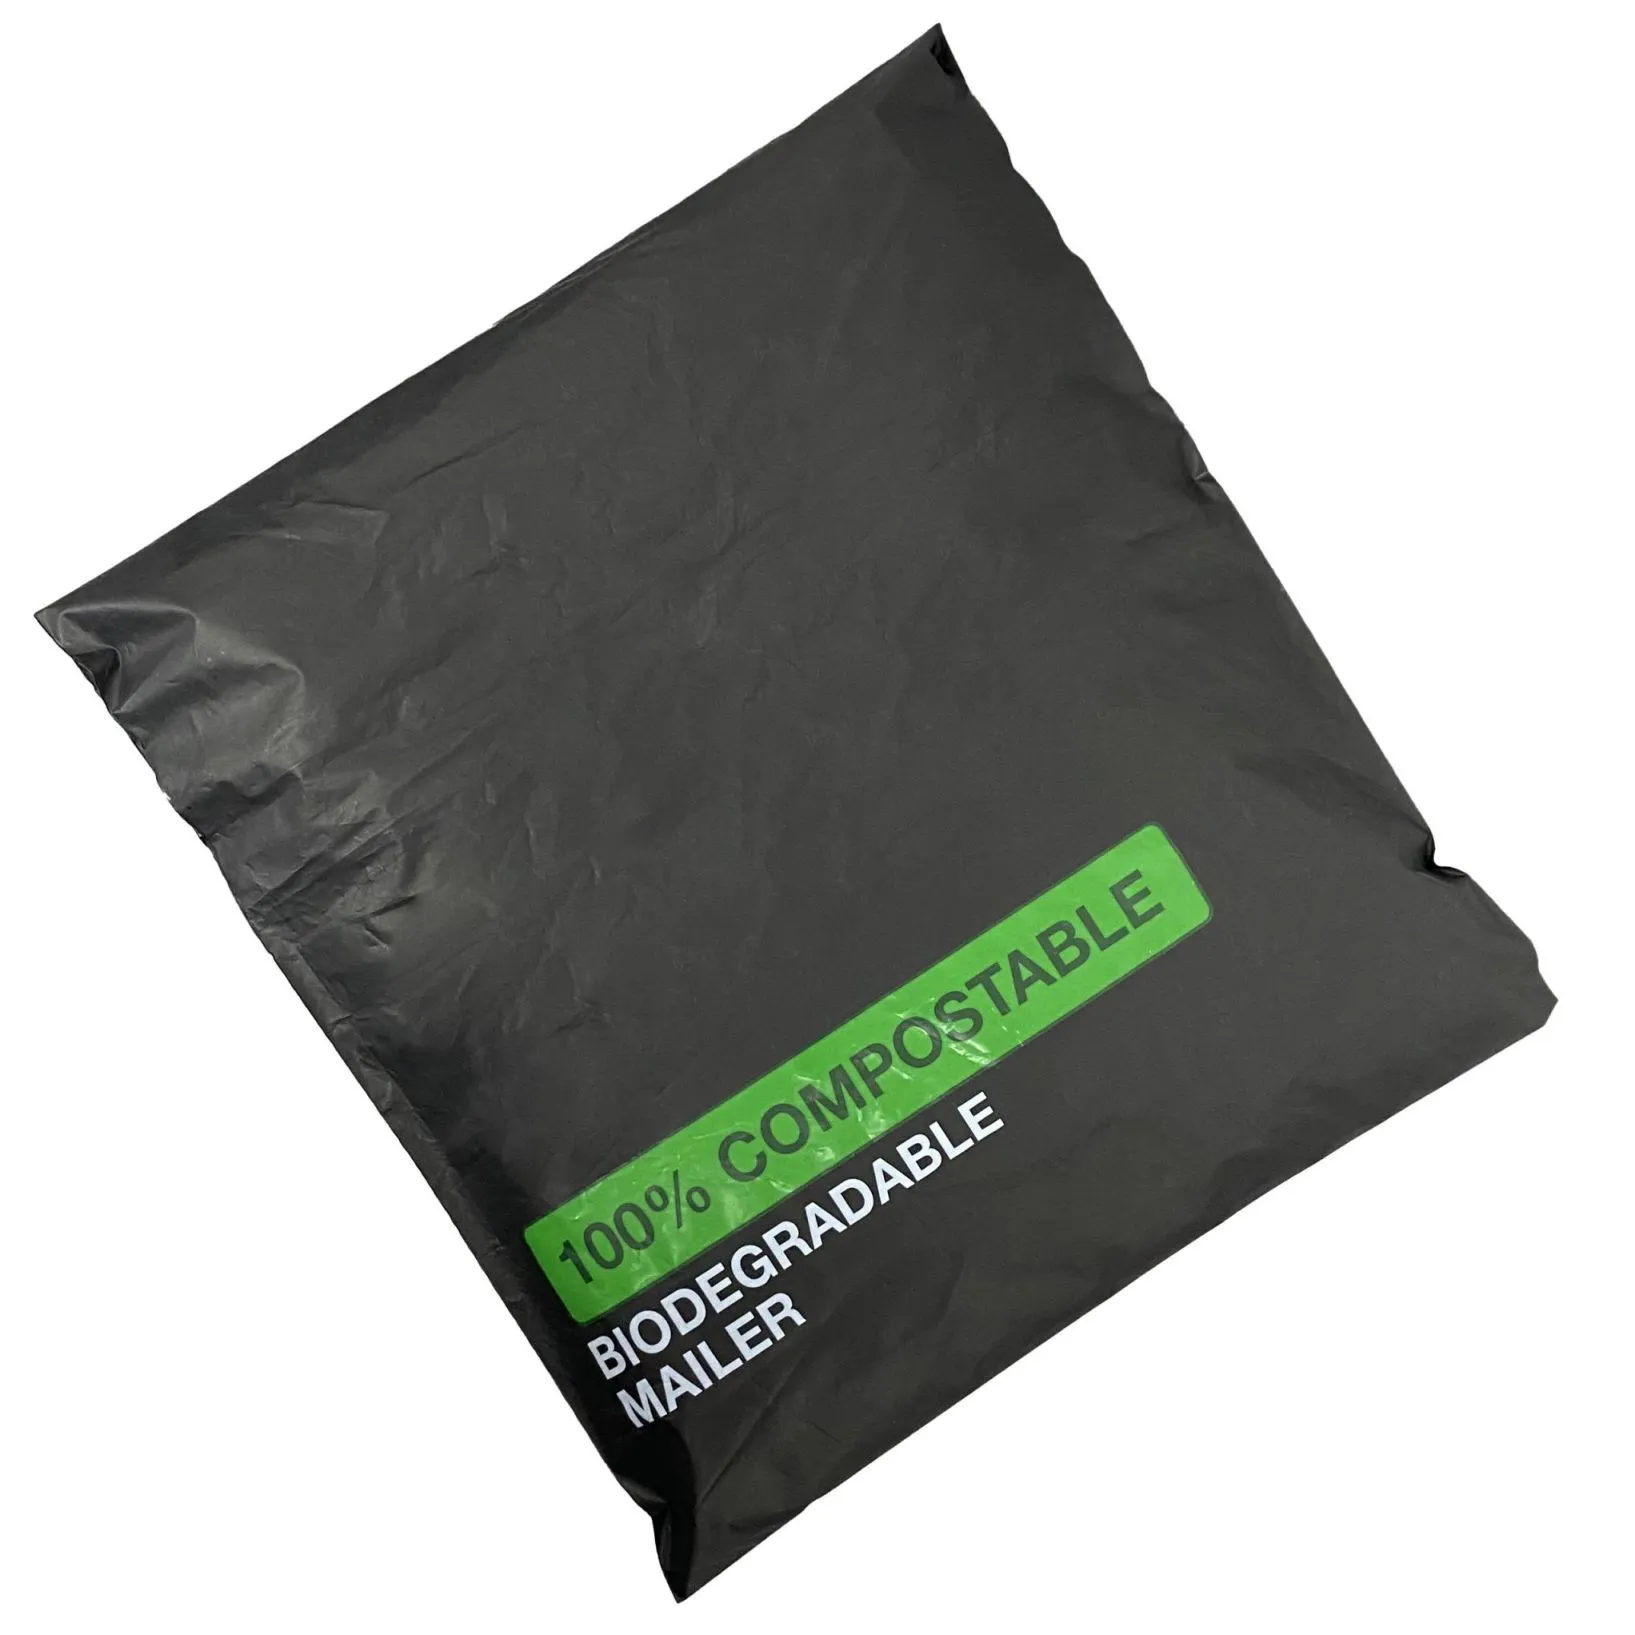 Biodegradable reusable bags